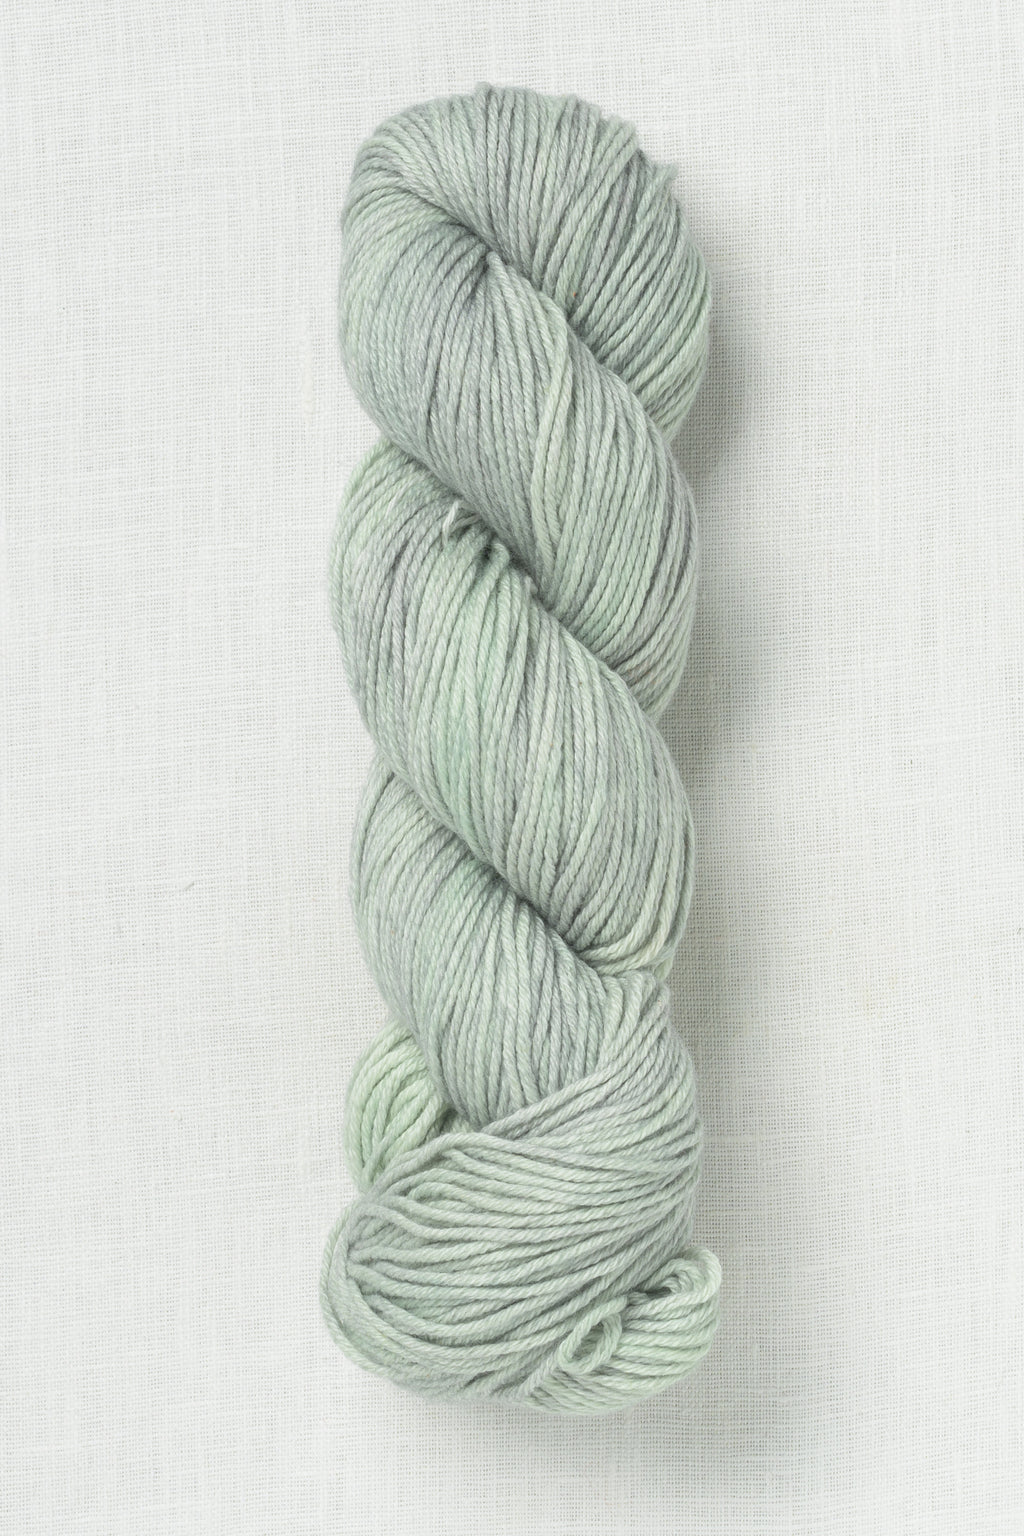 Madelinetosh Wool + Cotton Celadon (Core)